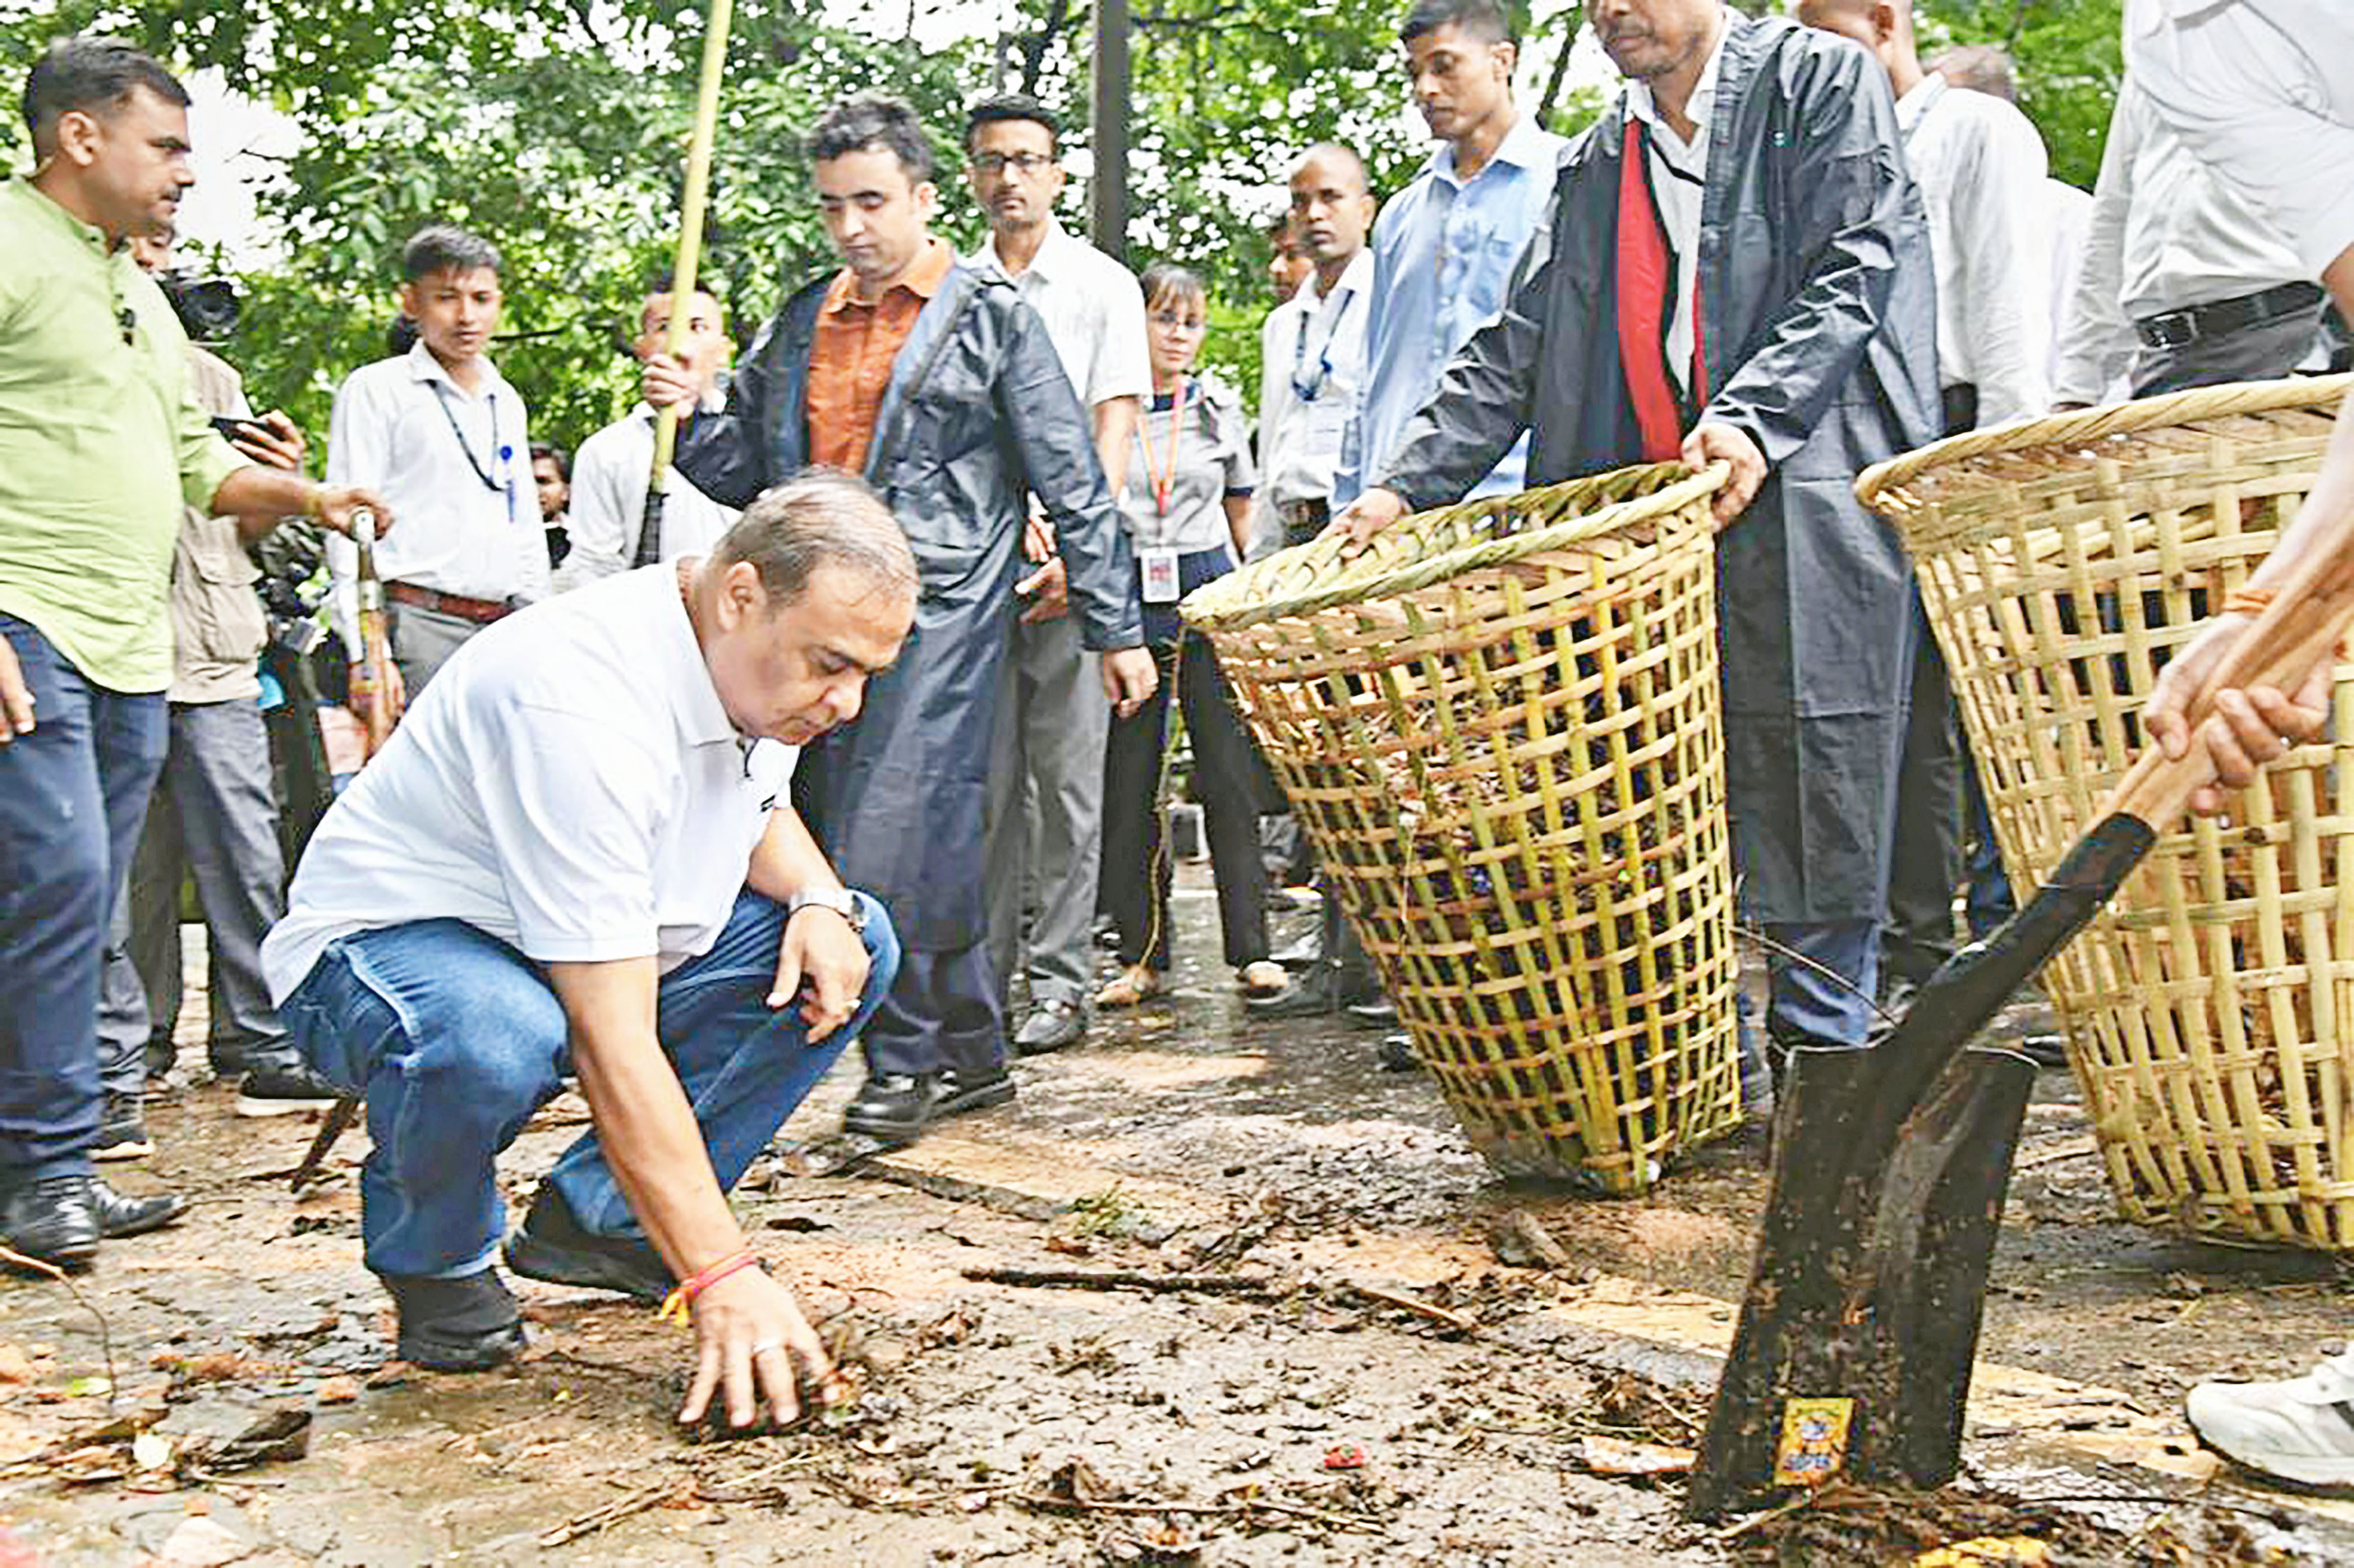 Assam Chief Minister Himanta Biswa Sarma participates in a special cleanliness programme ‘Ek Taarikh, Ek Ghanta, Ek Saath’ (Shramdaan) under 'Swachchta hi Seva' campaign ahead of Gandhi Jayanti, in Guwahati.